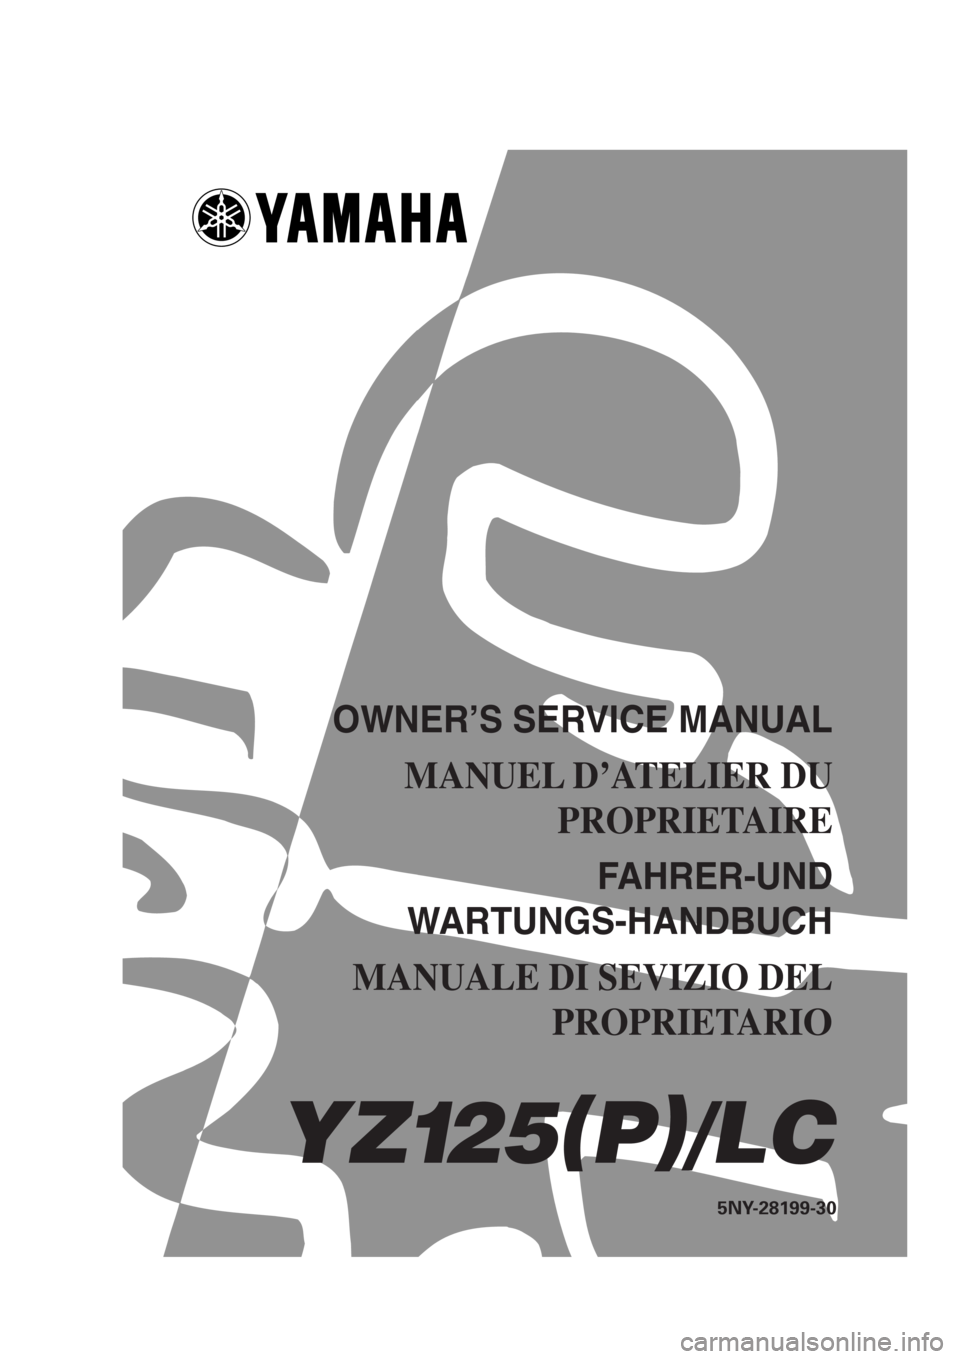 YAMAHA YZ125LC 2002  Manuale duso (in Italian) OWNER’S SERVICE MANUAL
MANUEL D’ATELIER DU 
PROPRIETAIRE
FAHRER-UND 
WARTUNGS-HANDBUCH
MANUALE DI SEVIZIO DEL
PROPRIETARI
O
YZ125(
P)
/LC
5NY-28199-30 JAPAN
8 ×1!H)
YZ125(
P)
/LC 